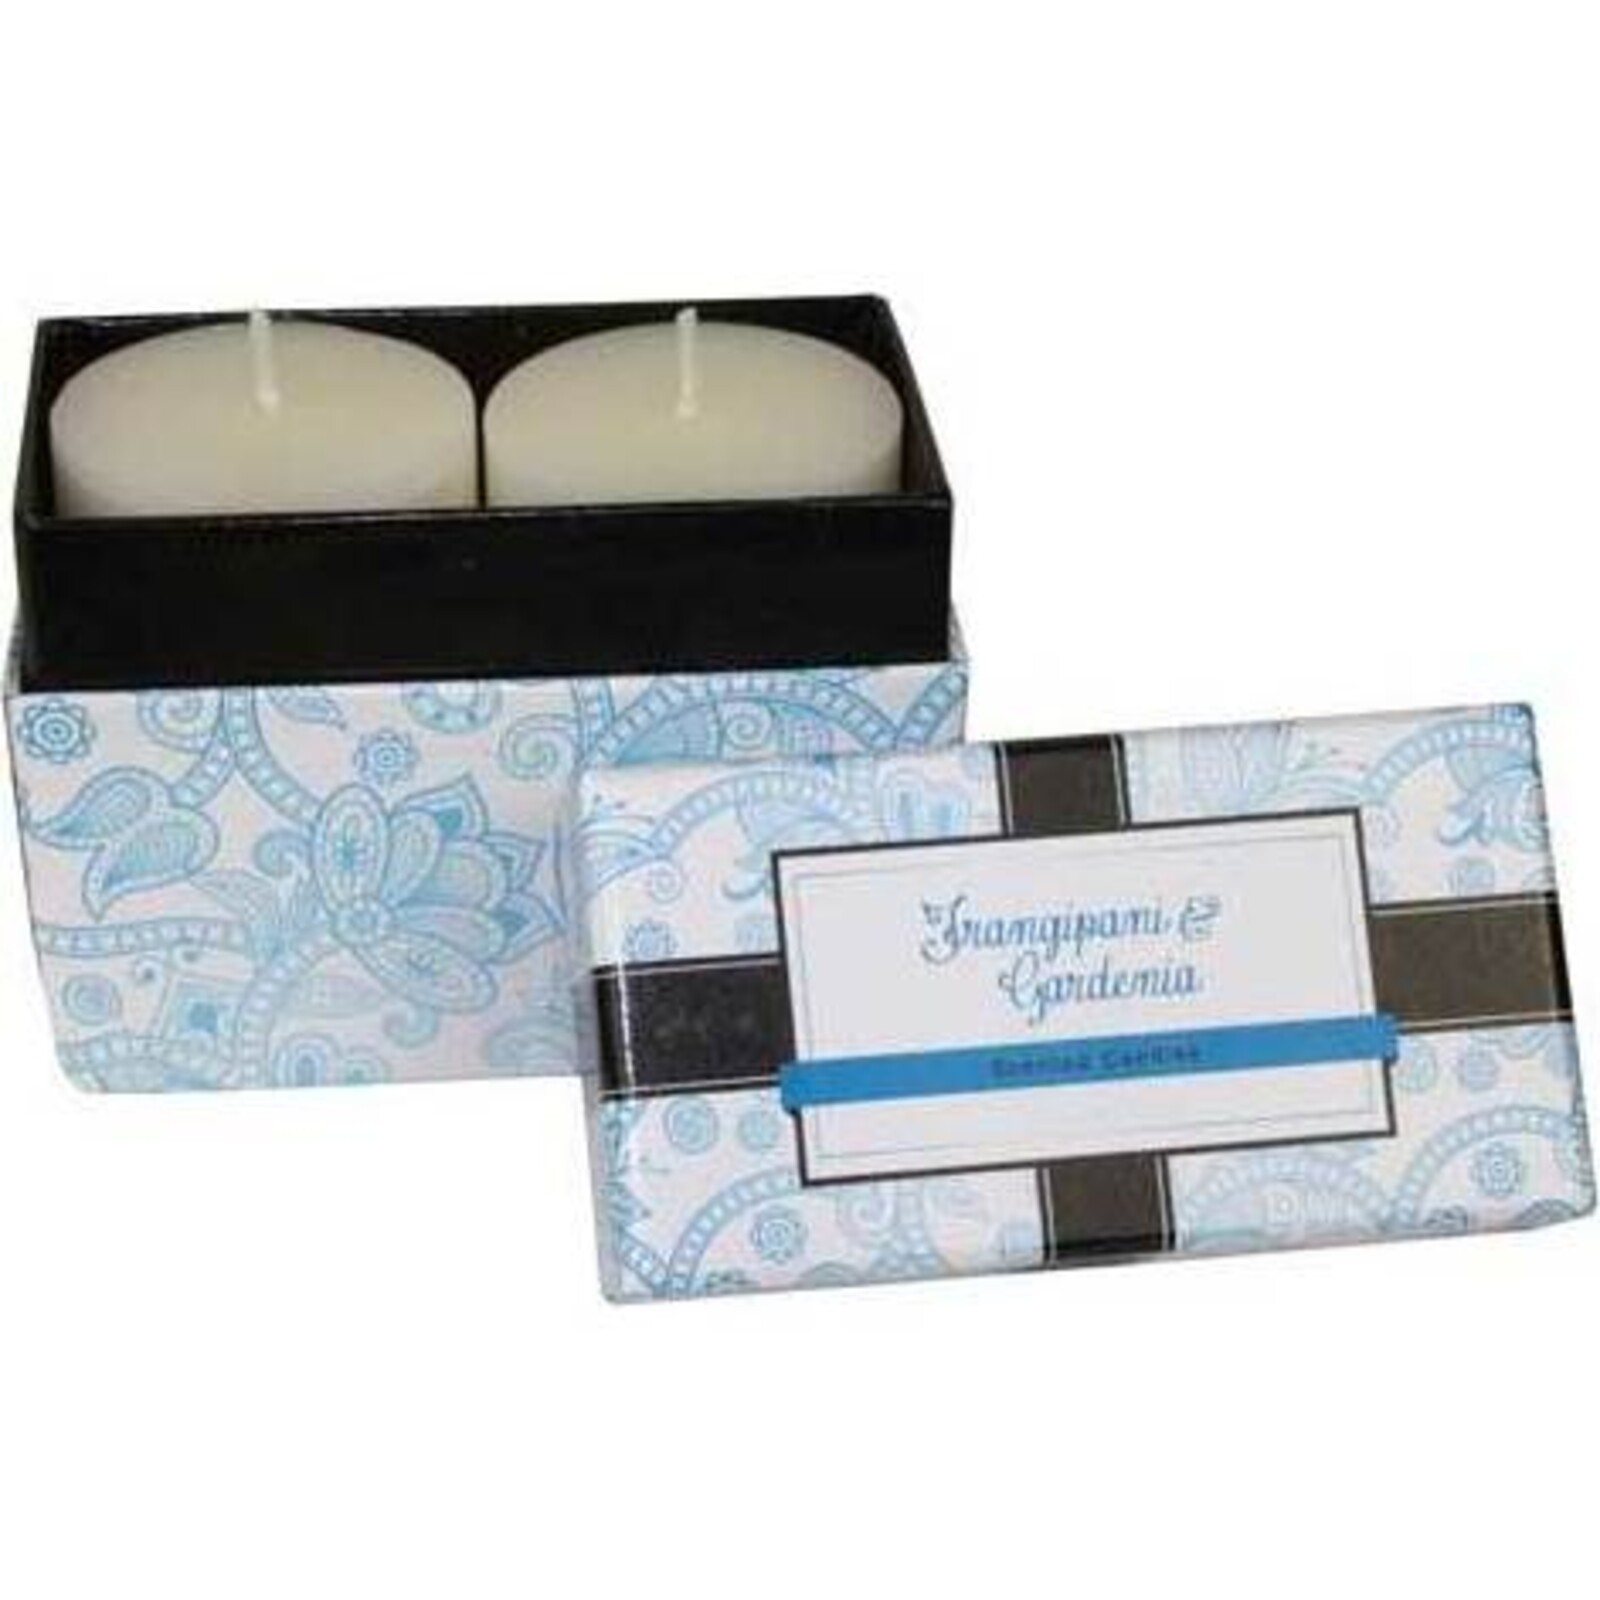 Frangipani & Gardenia  Boxed Candle S/2